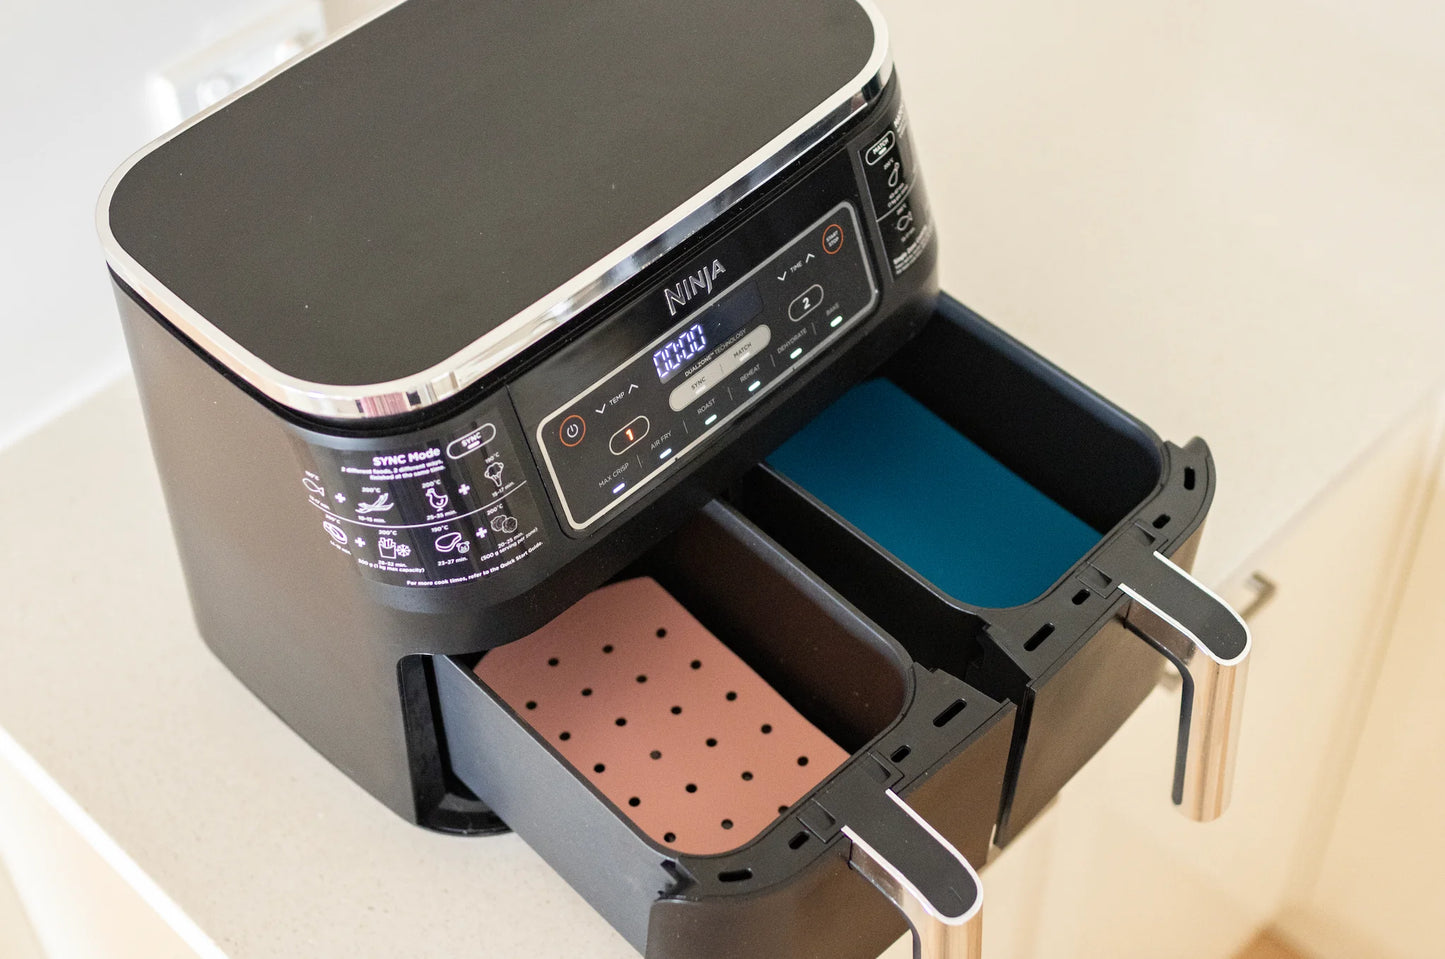 Krumbsco Reusable Baking Mats - Rectangle - Air Fryer Size